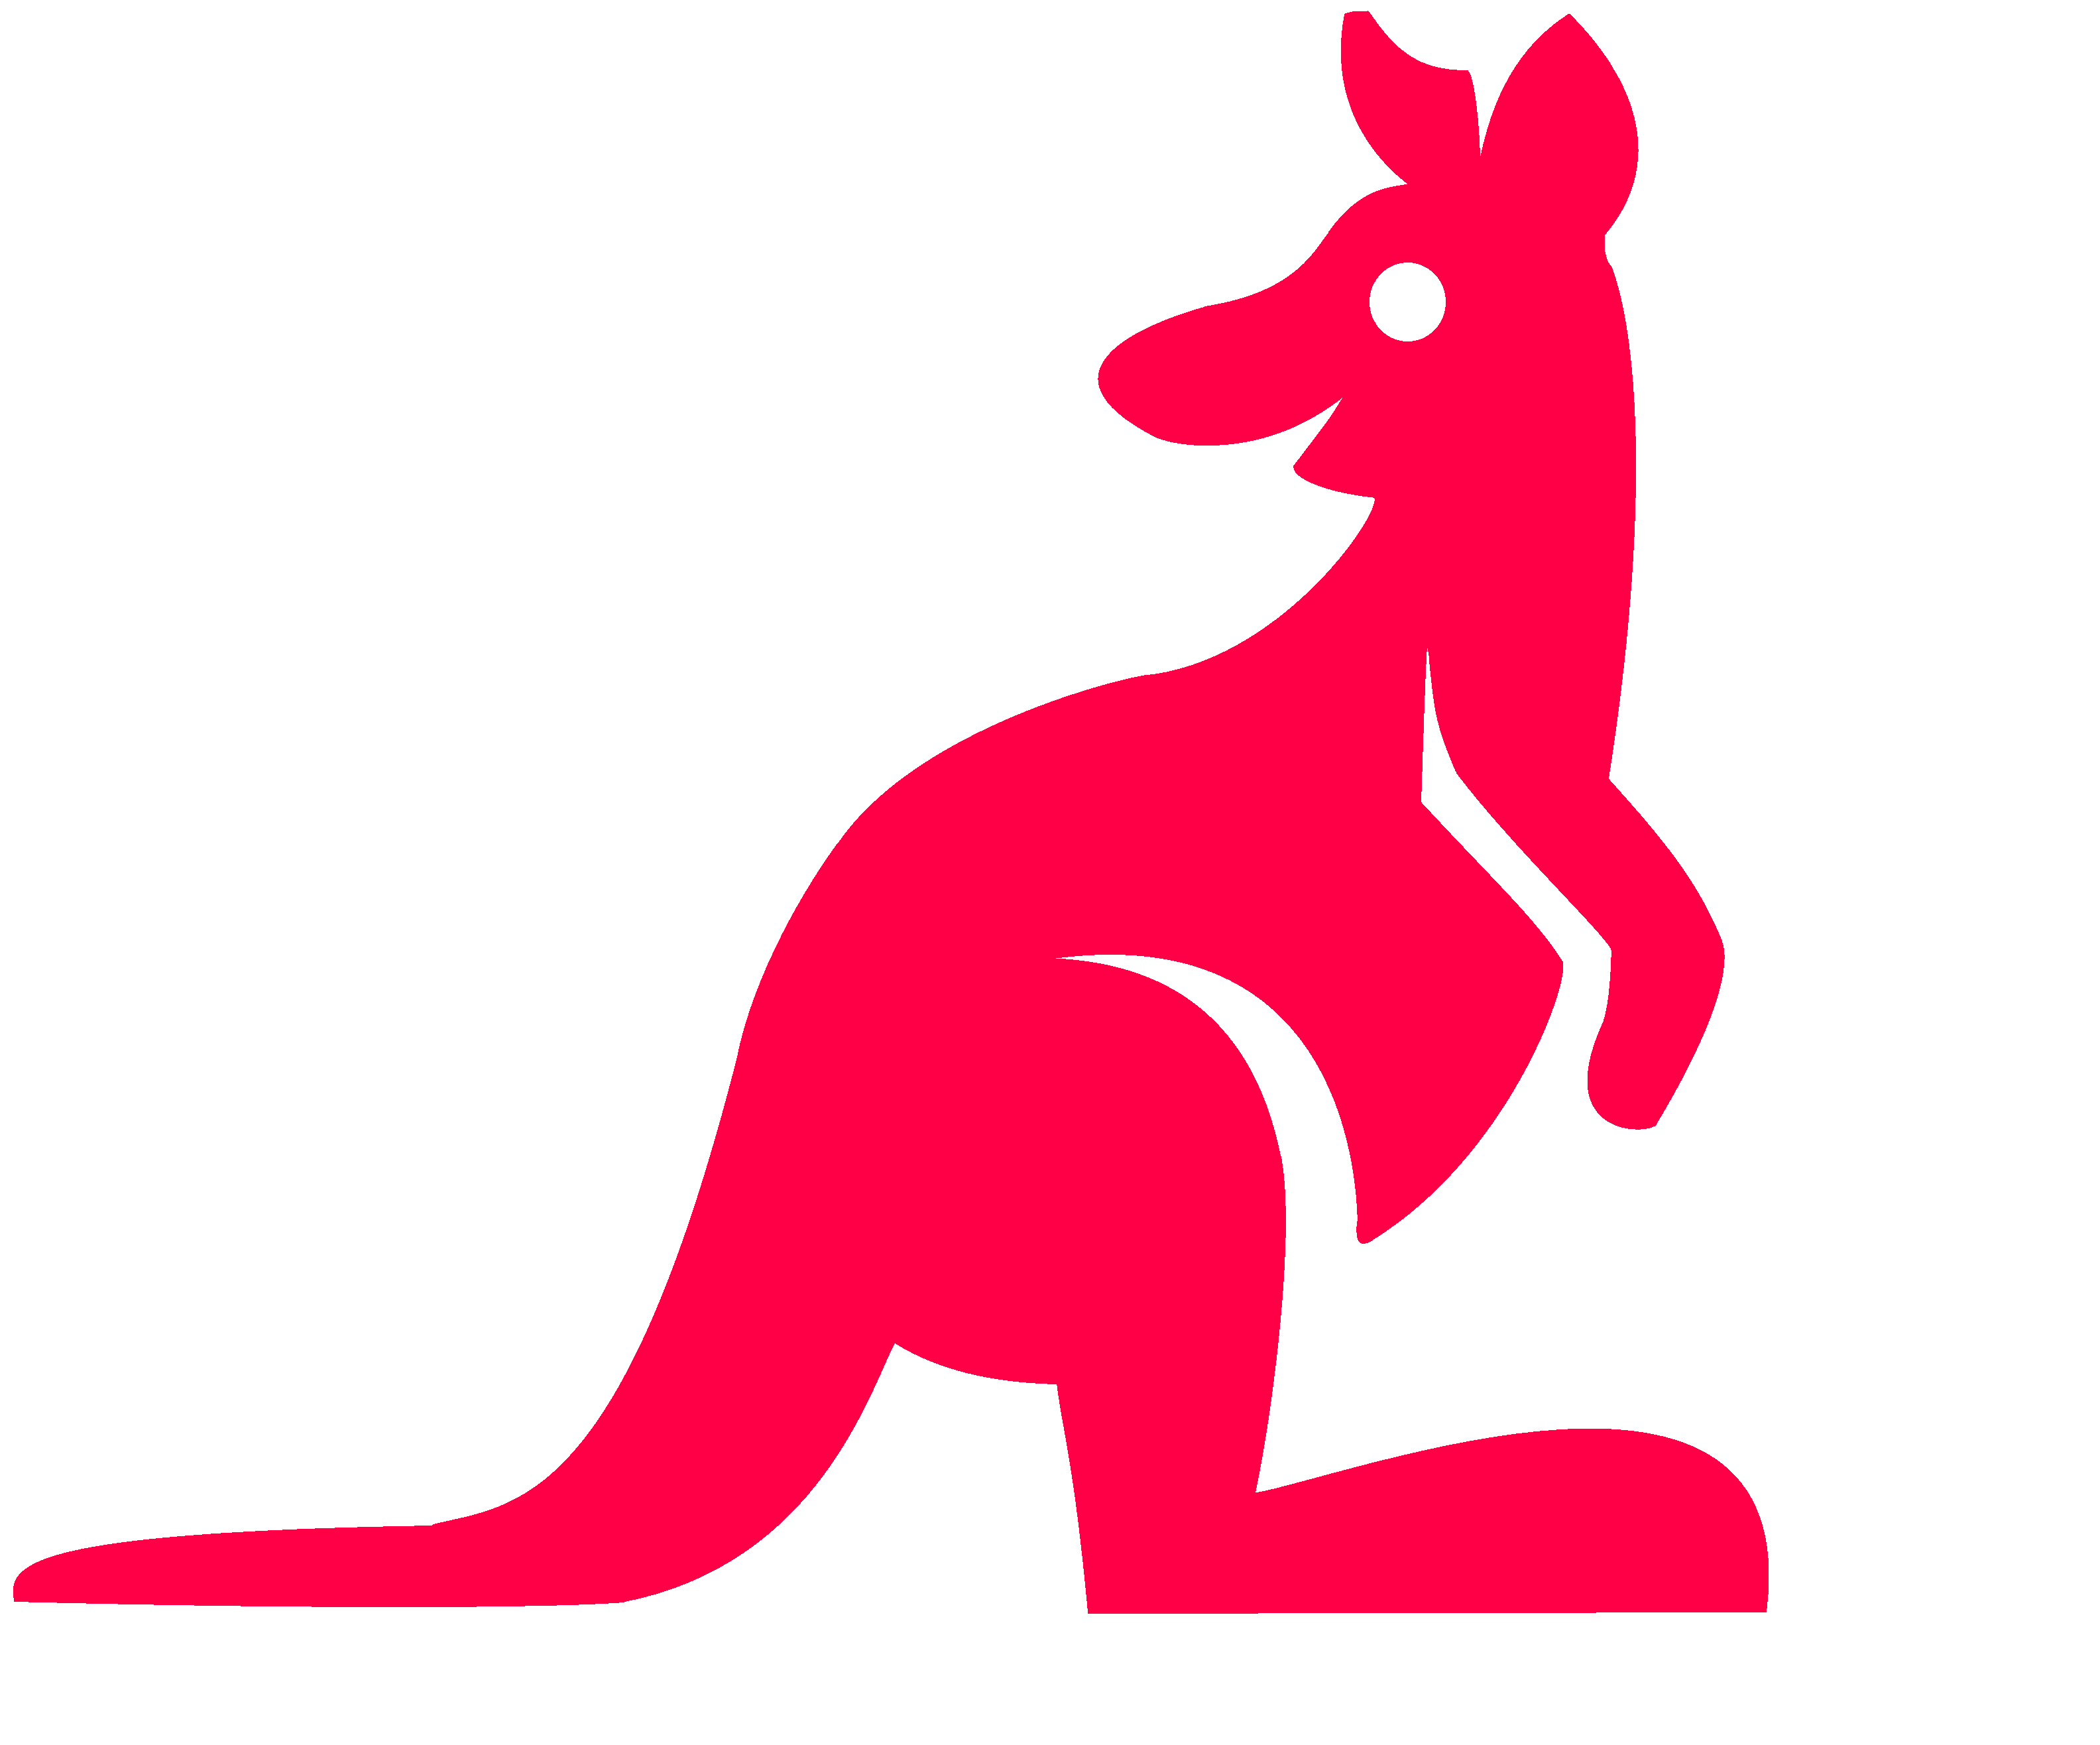 Логотип кенгуру. Розовый кенгуру. Кенгуру логотип. Фирменный знак кенгуру. Эмблема с кенгуренком.